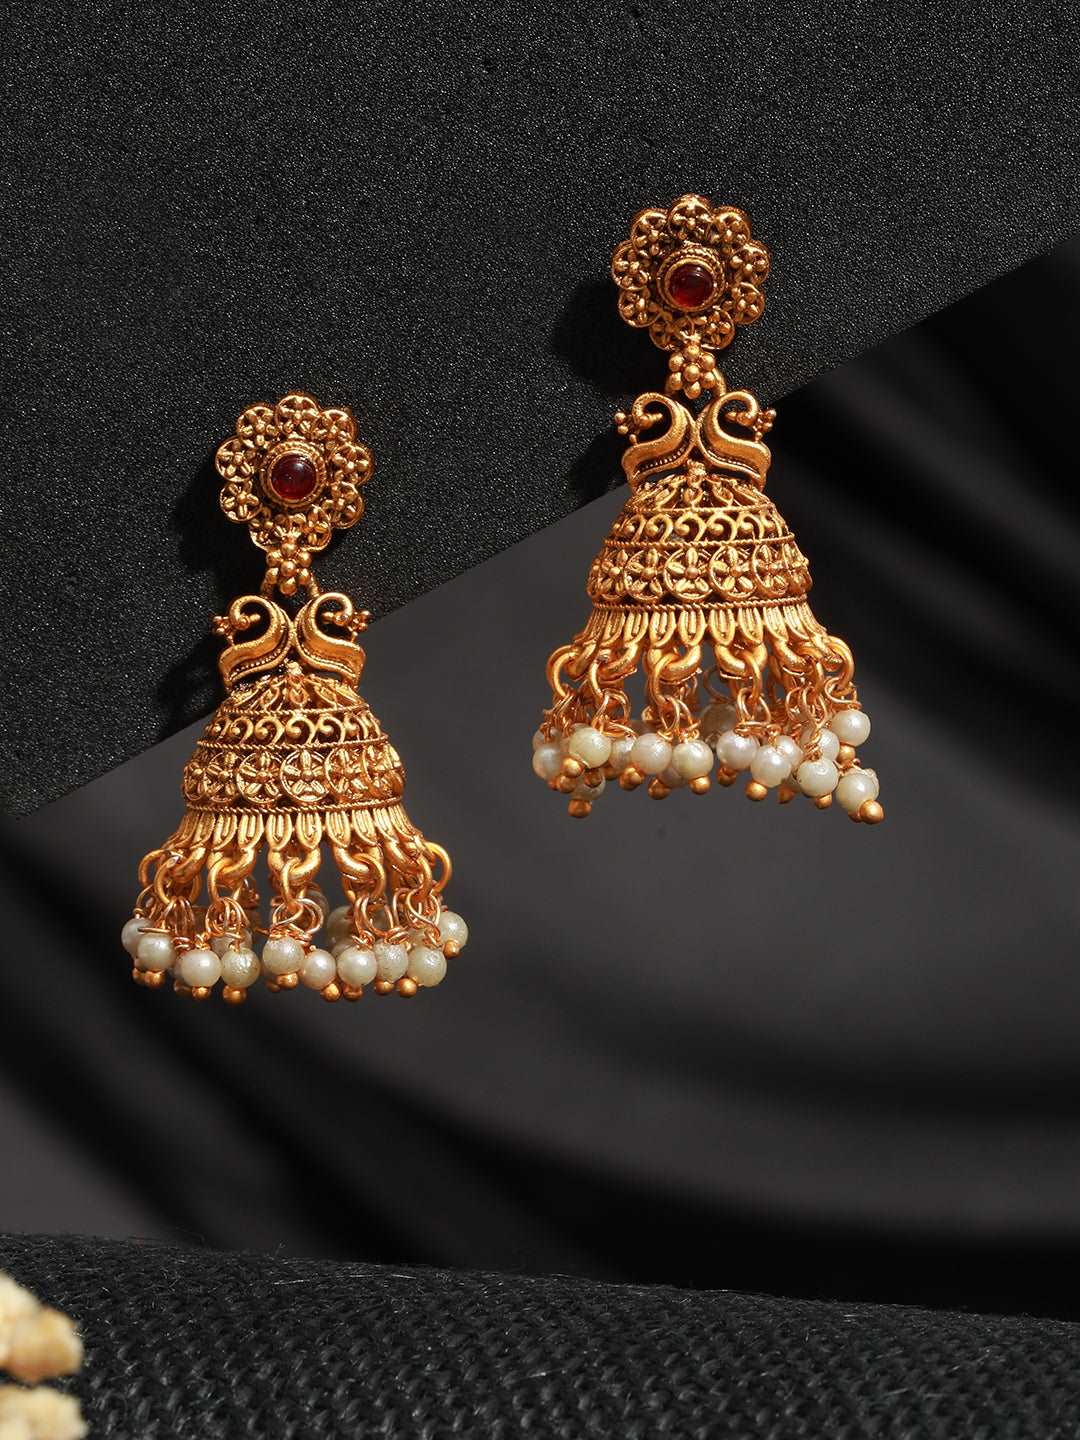 Top more than 195 gold regular earrings super hot